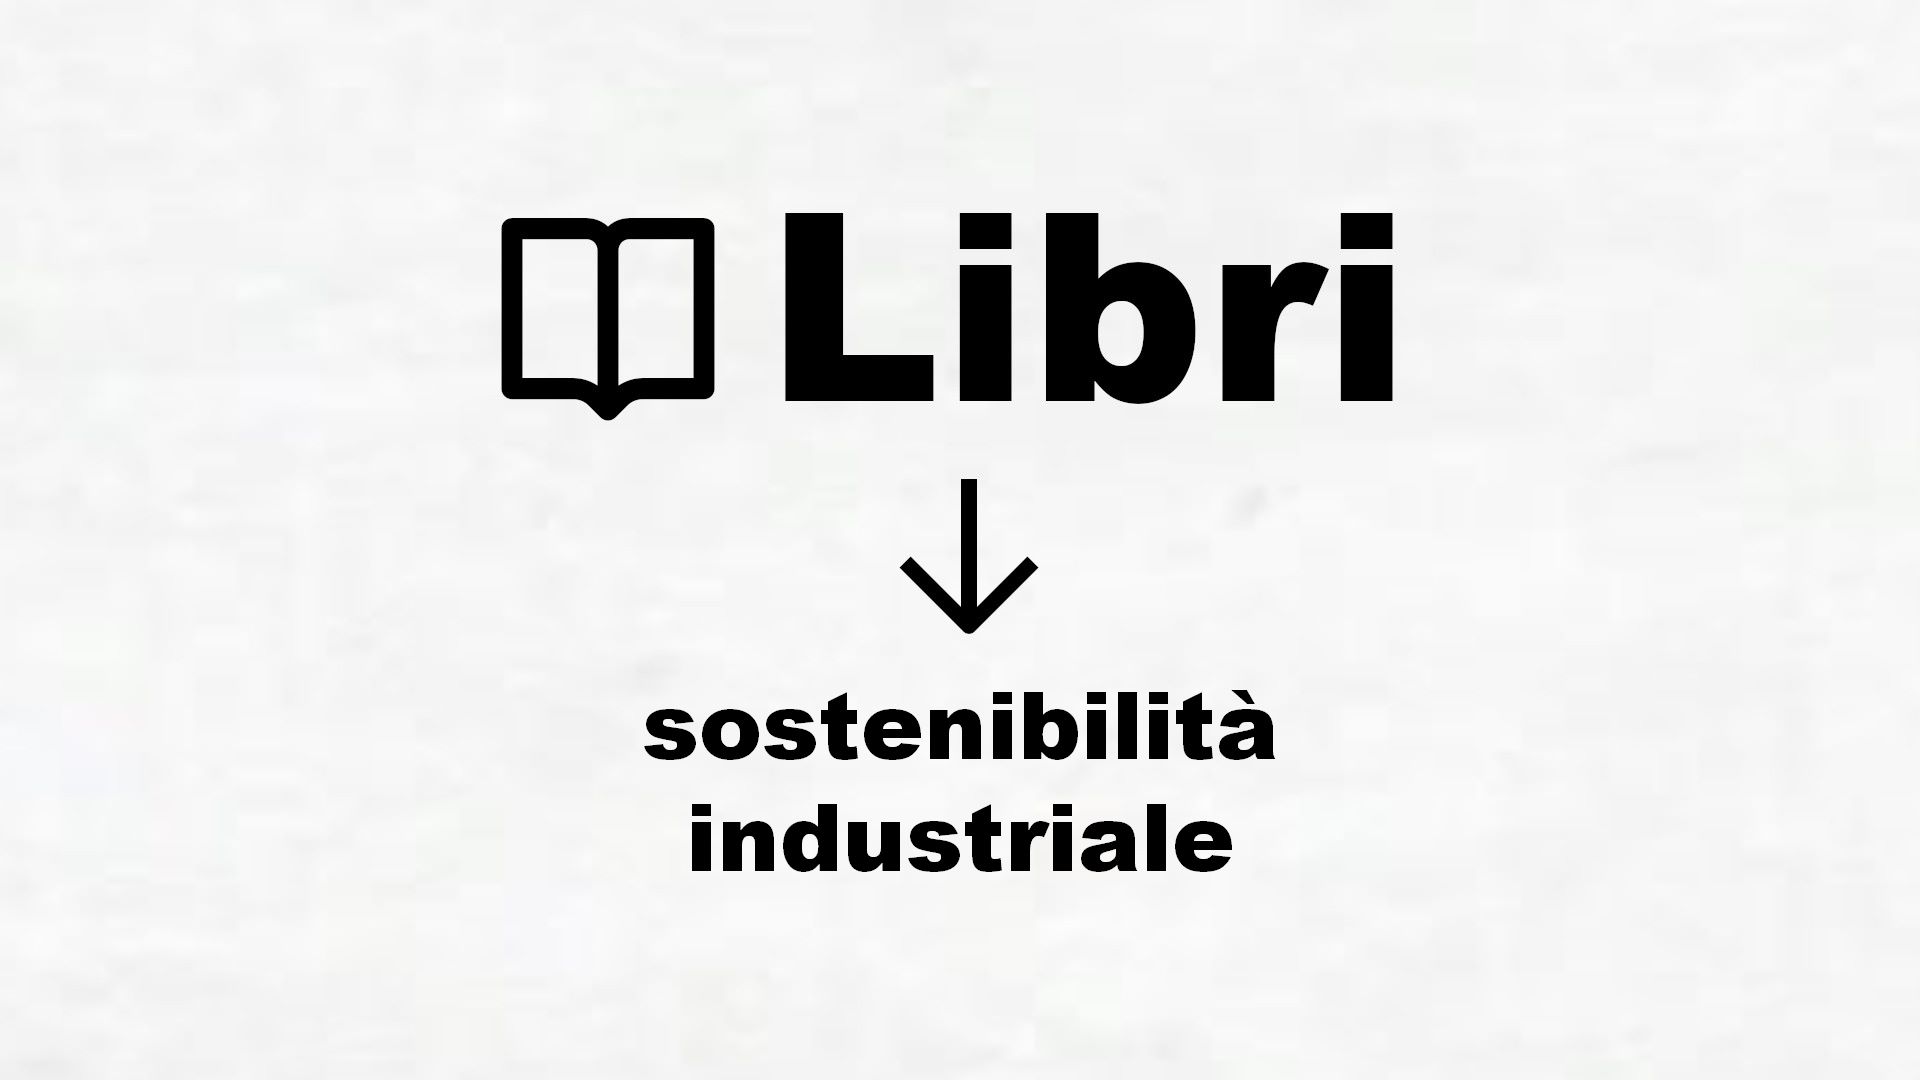 Manuali di sostenibilità industriale